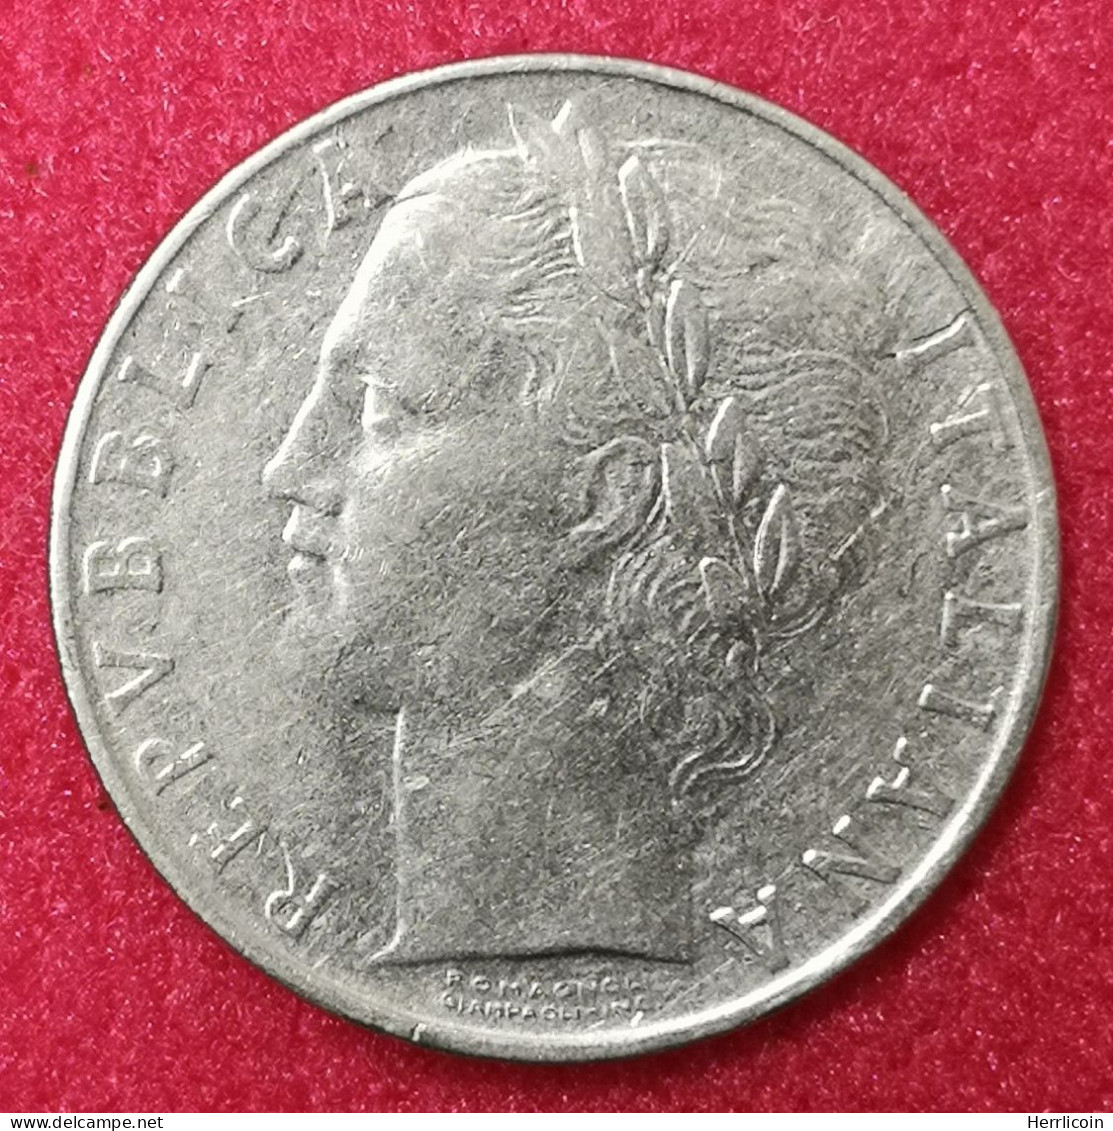 1956 - 100 Lire - Italie [KM#96.1] - 100 Lire